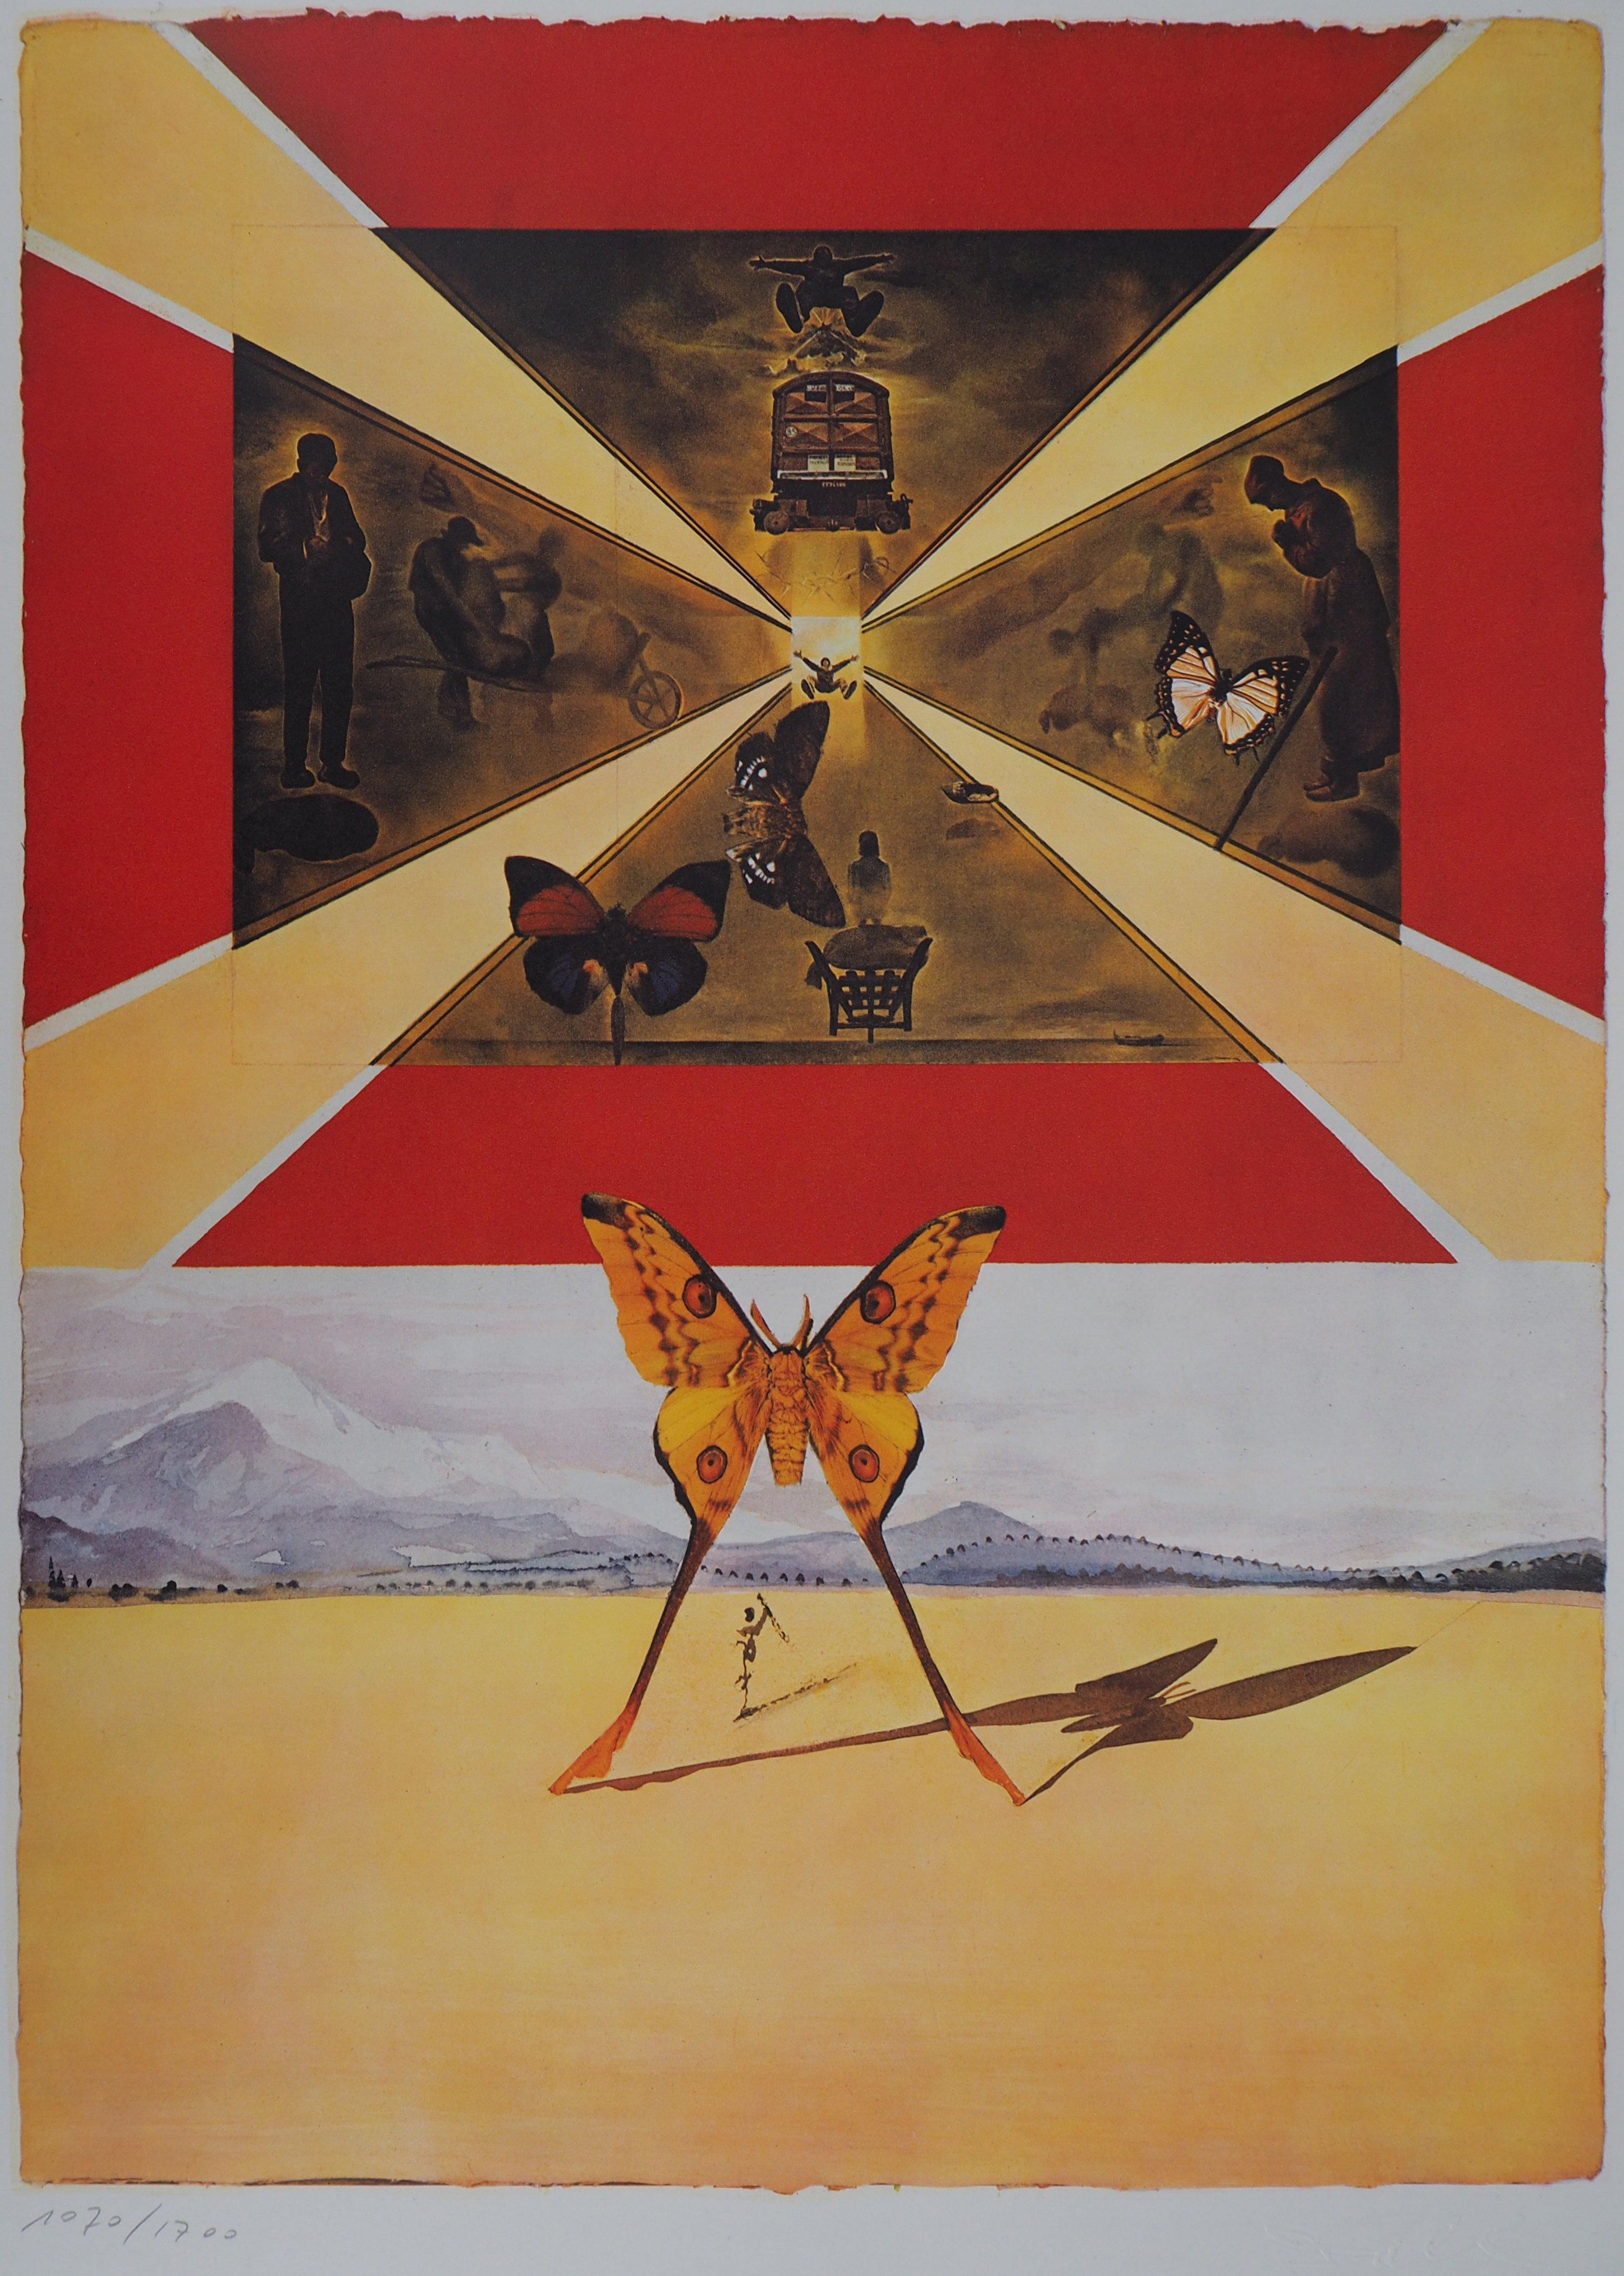 Butterfly suite : Roussillon - Heliogravure - 1969 (Field #69-2 E) - Print by Salvador Dalí